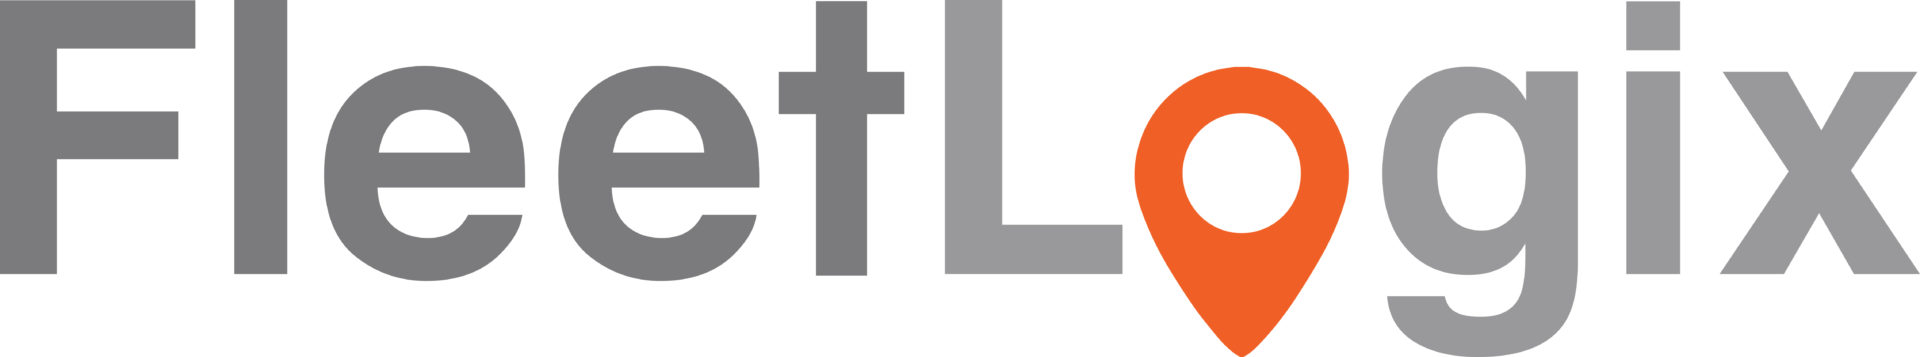 FleetLogix logo